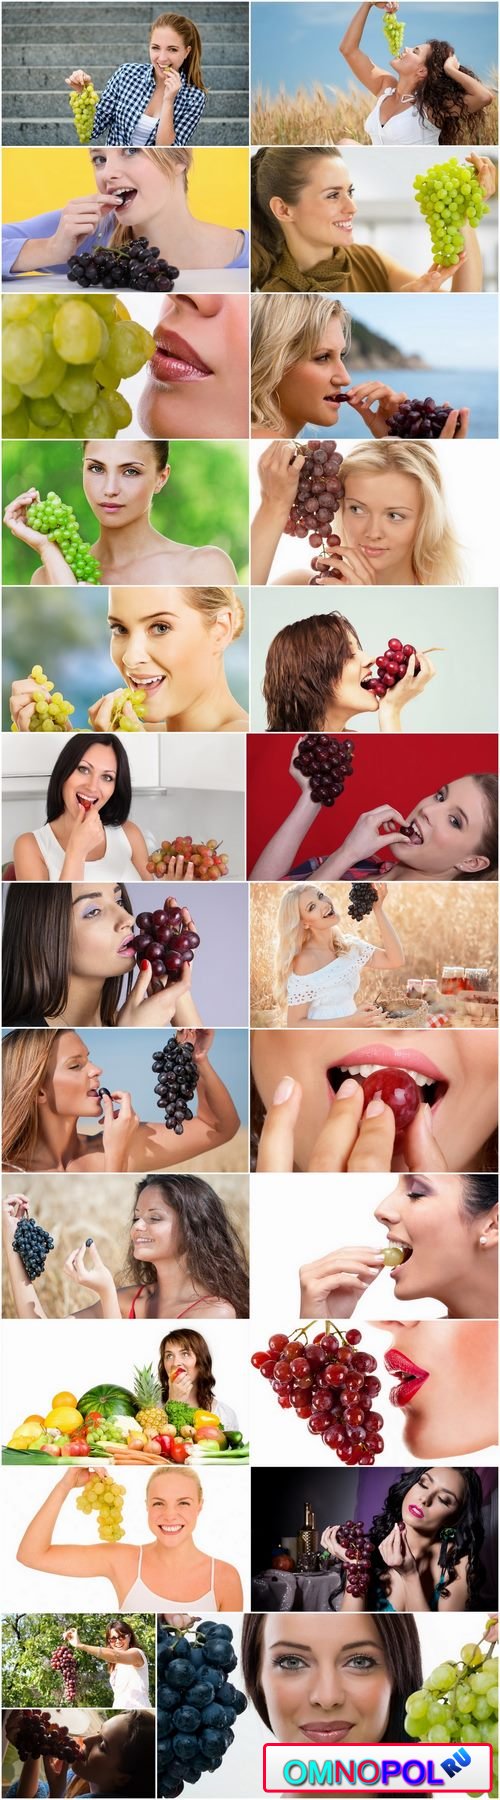 Girl woman eating grapes 25 HQ Jpeg